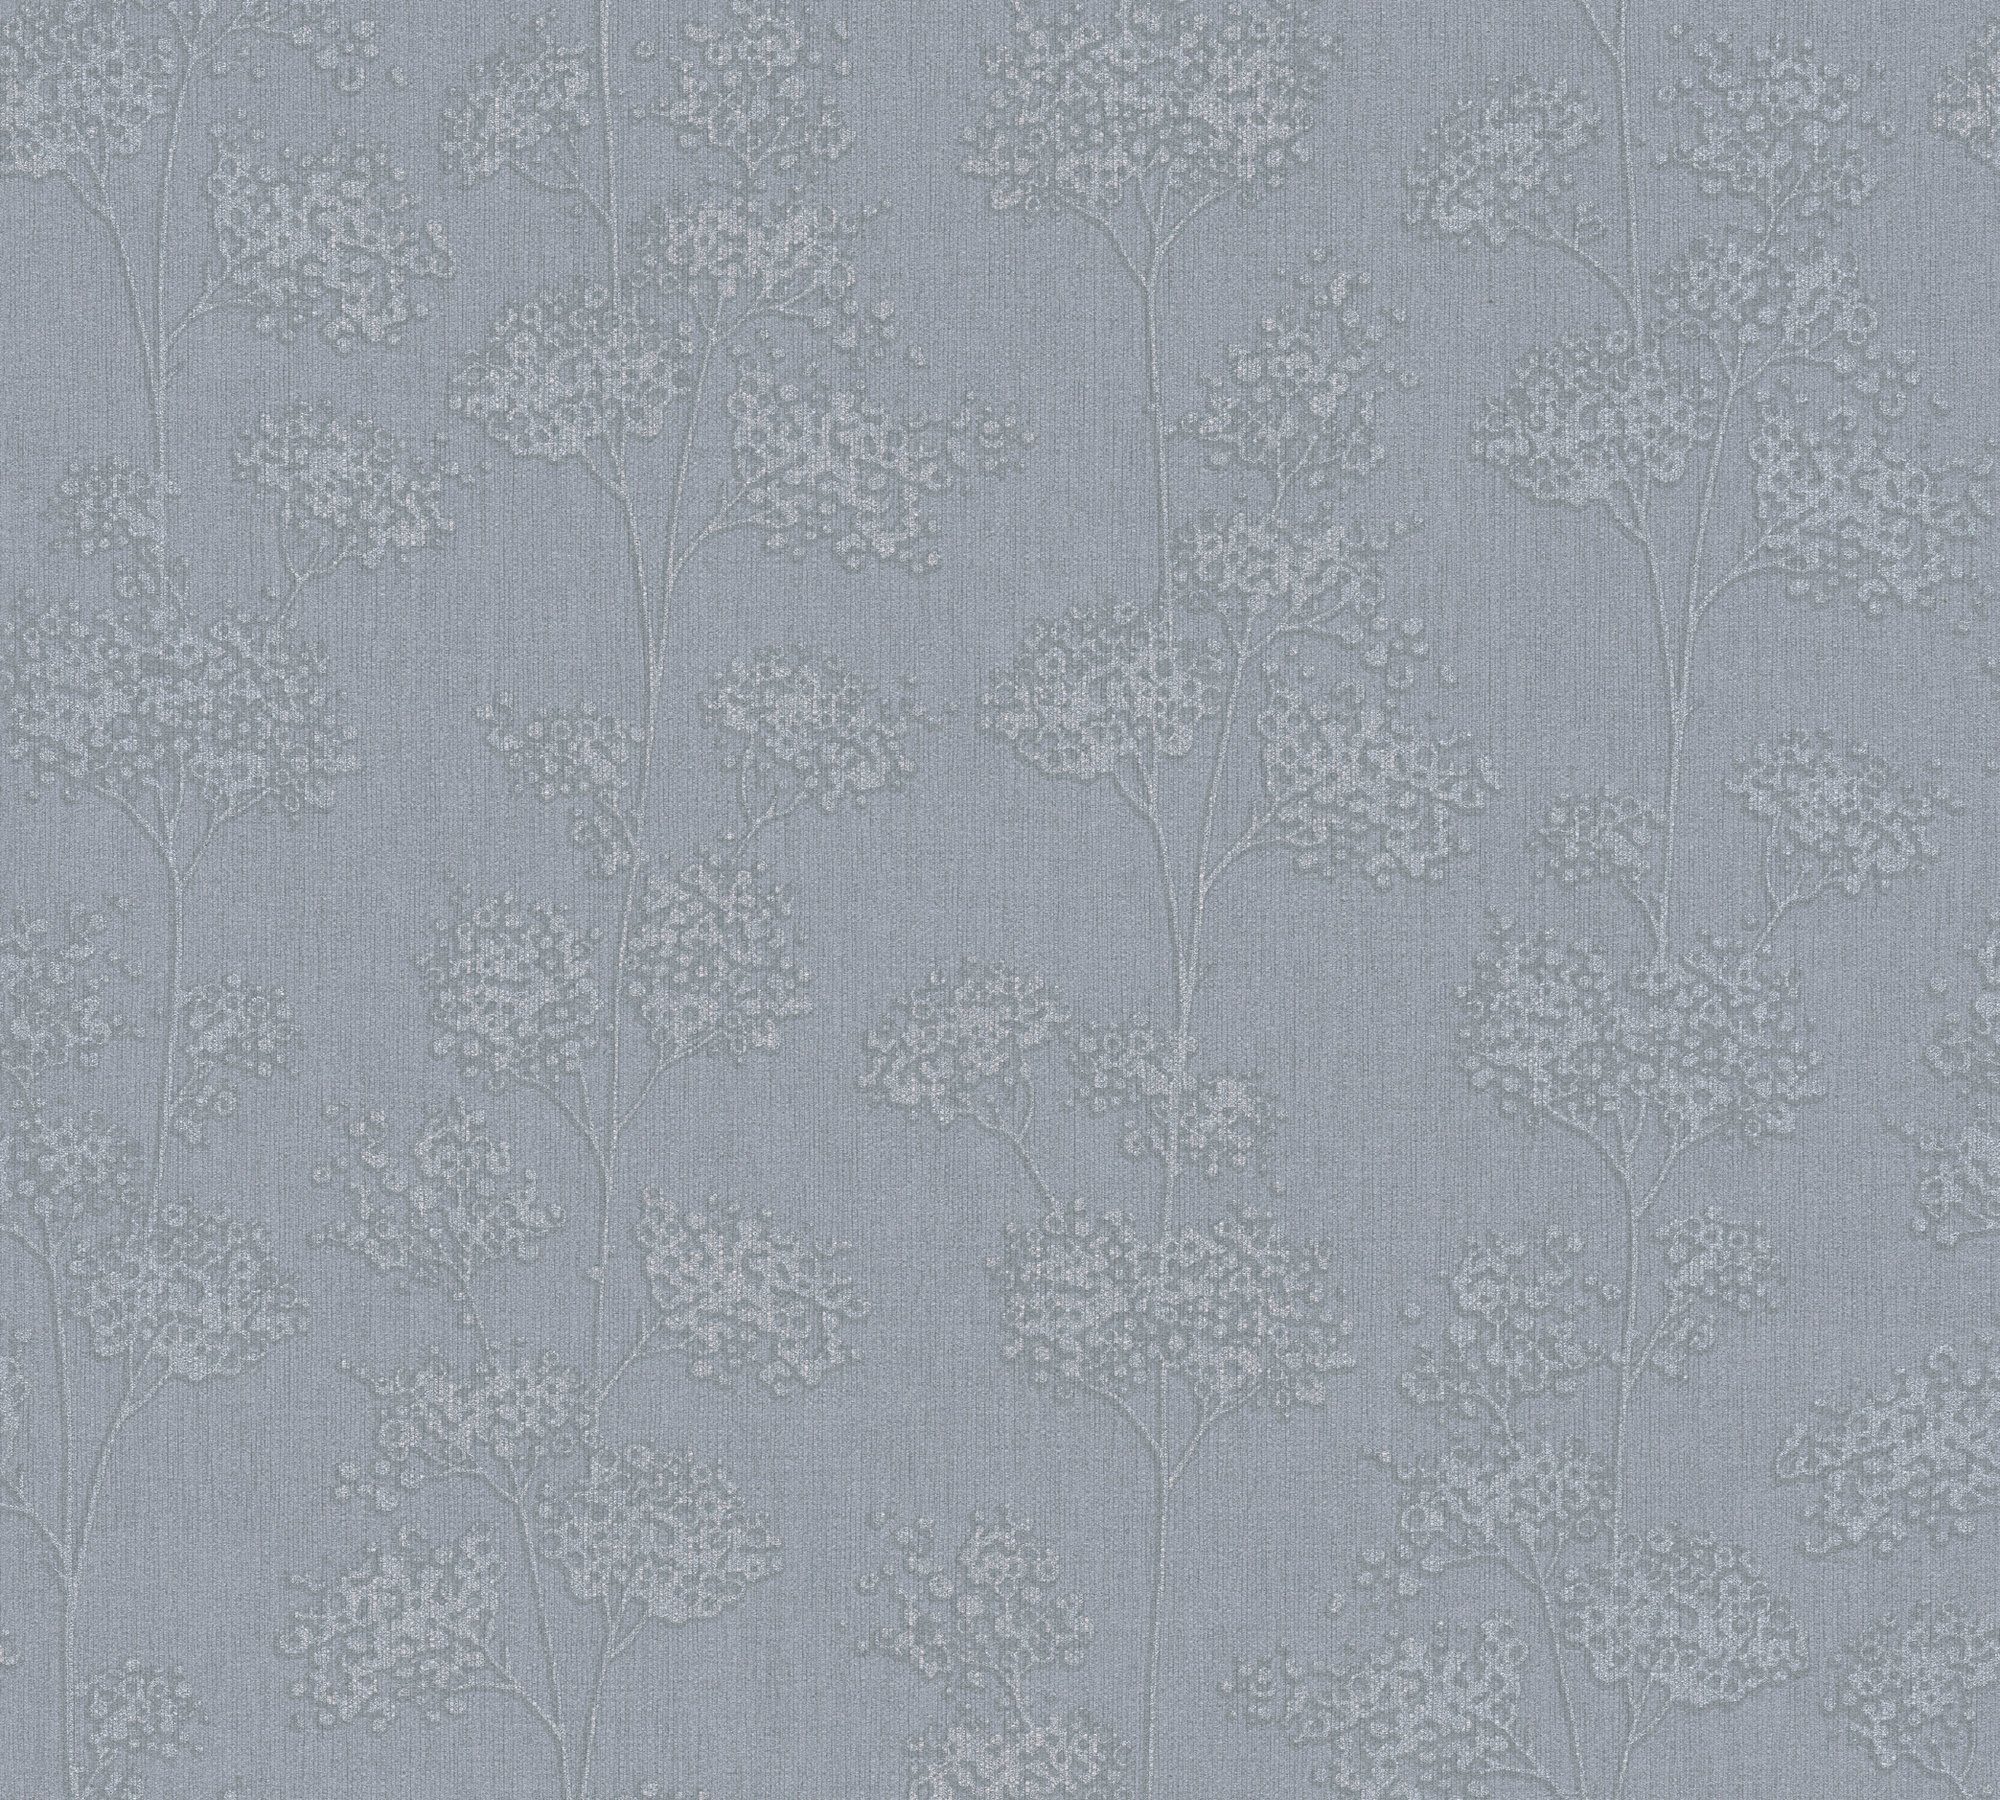 Modern floral, Vliestapete grau/metallic Floral Création Wall, Premium botanisch, A.S. Tapete